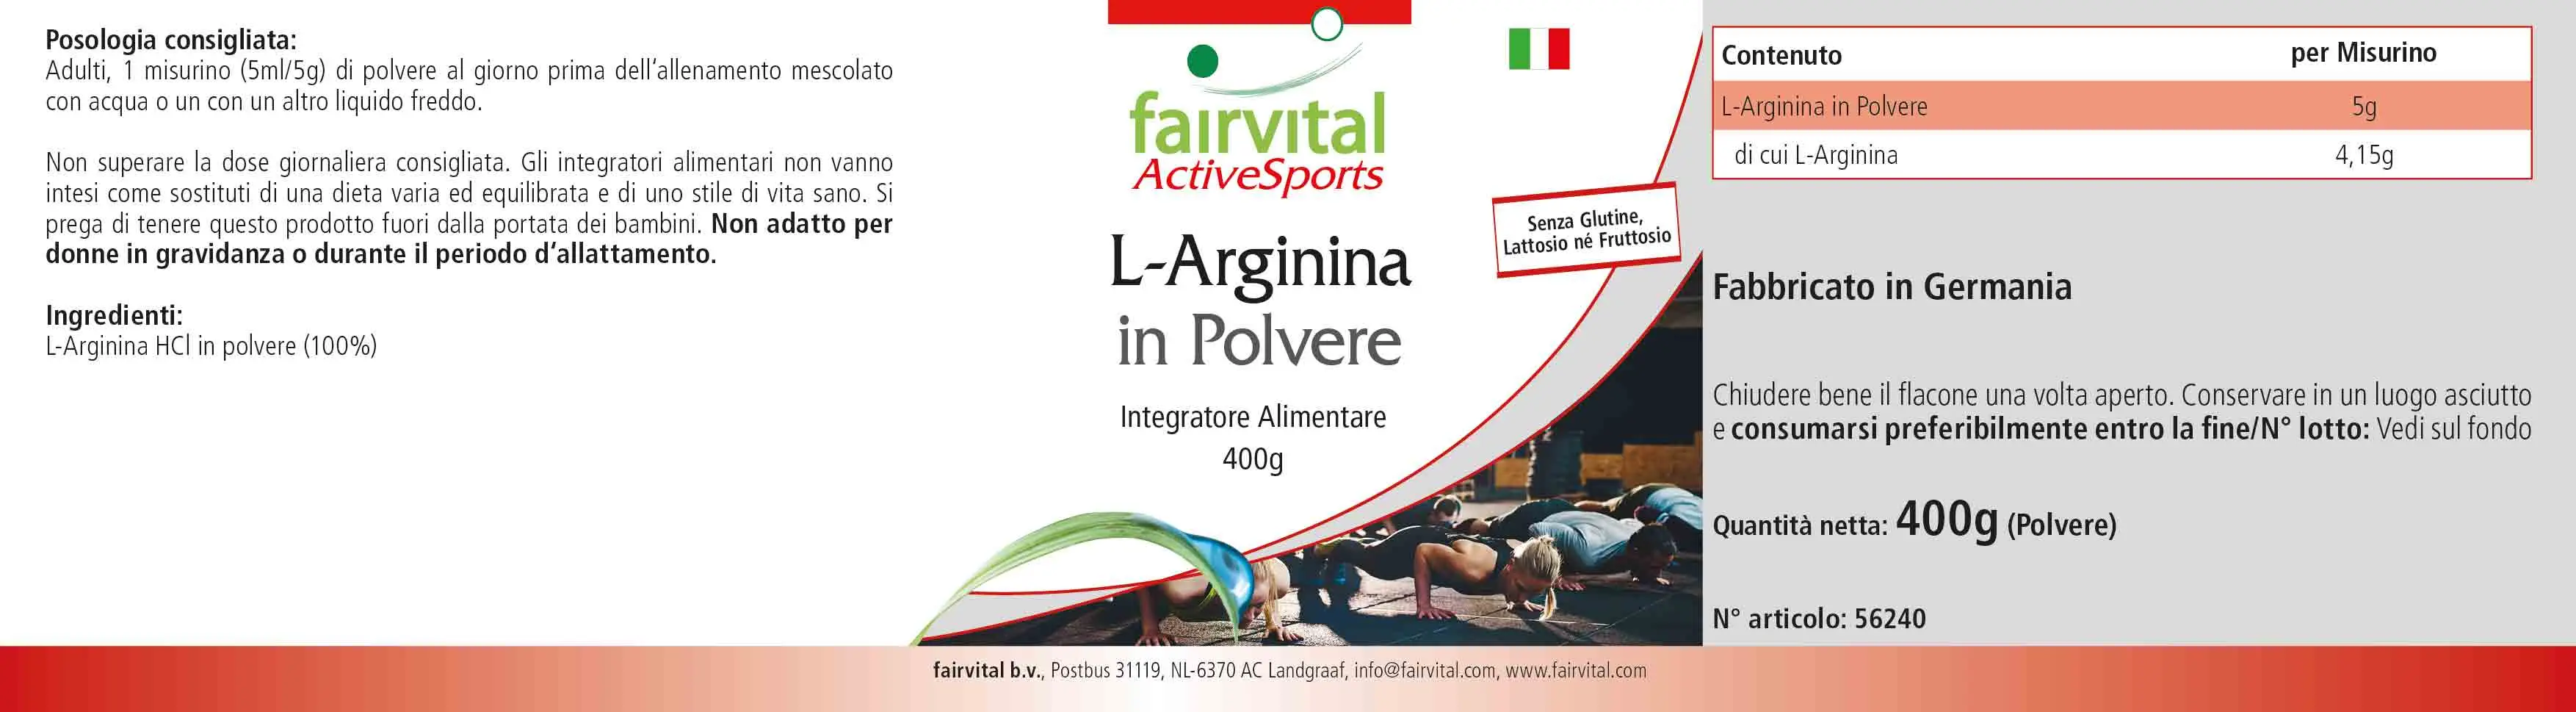 L-Arginine powder 400g